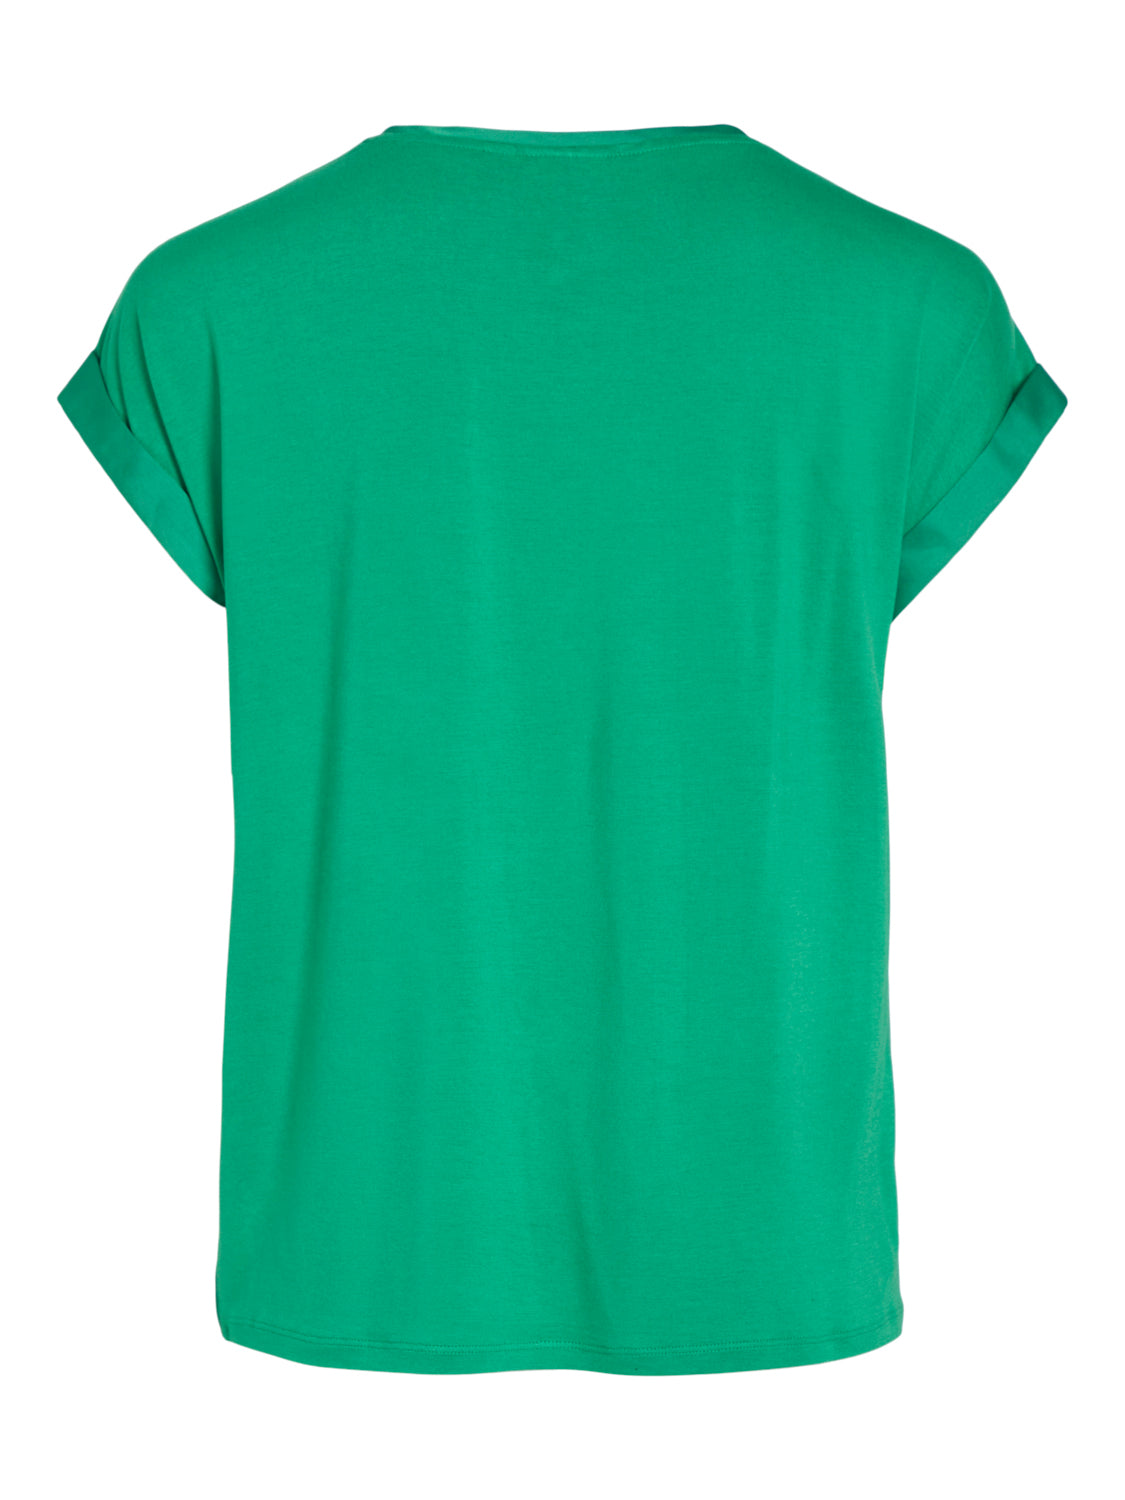 VIELLETTE T-Shirts & Tops - Bright Green